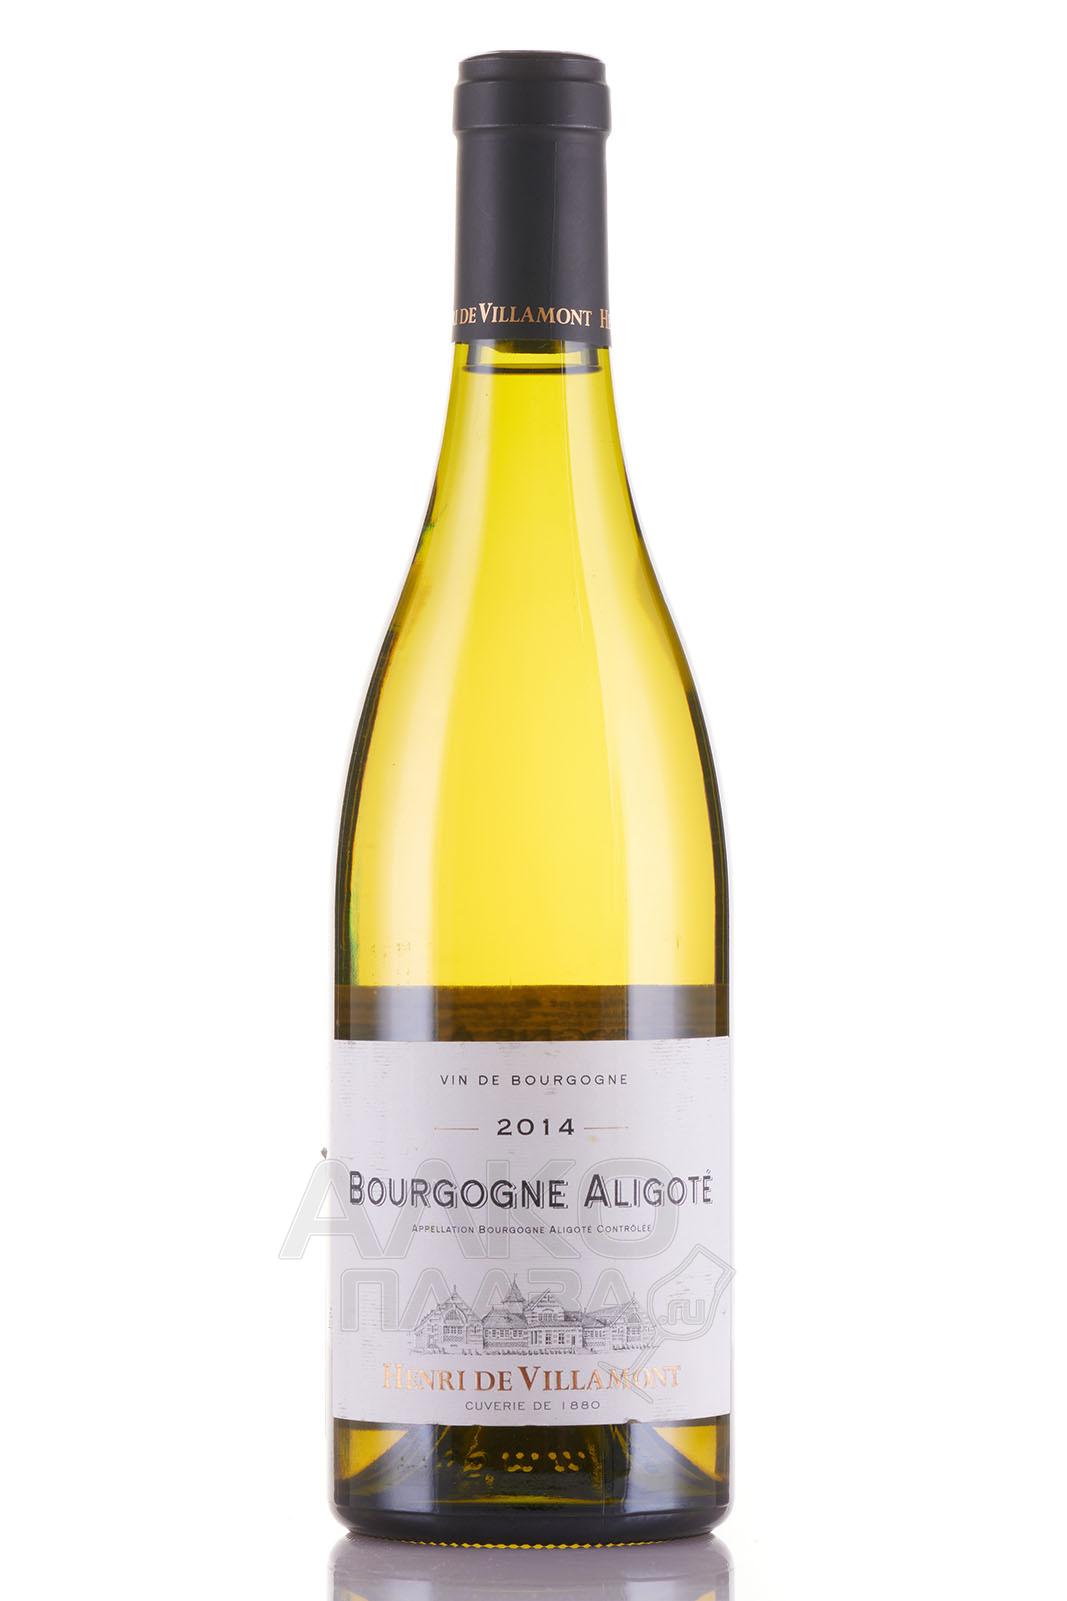 Henri de Villamont Bourgogne Aligote французское вино Анри де Виллямон Бургонь Алиготе